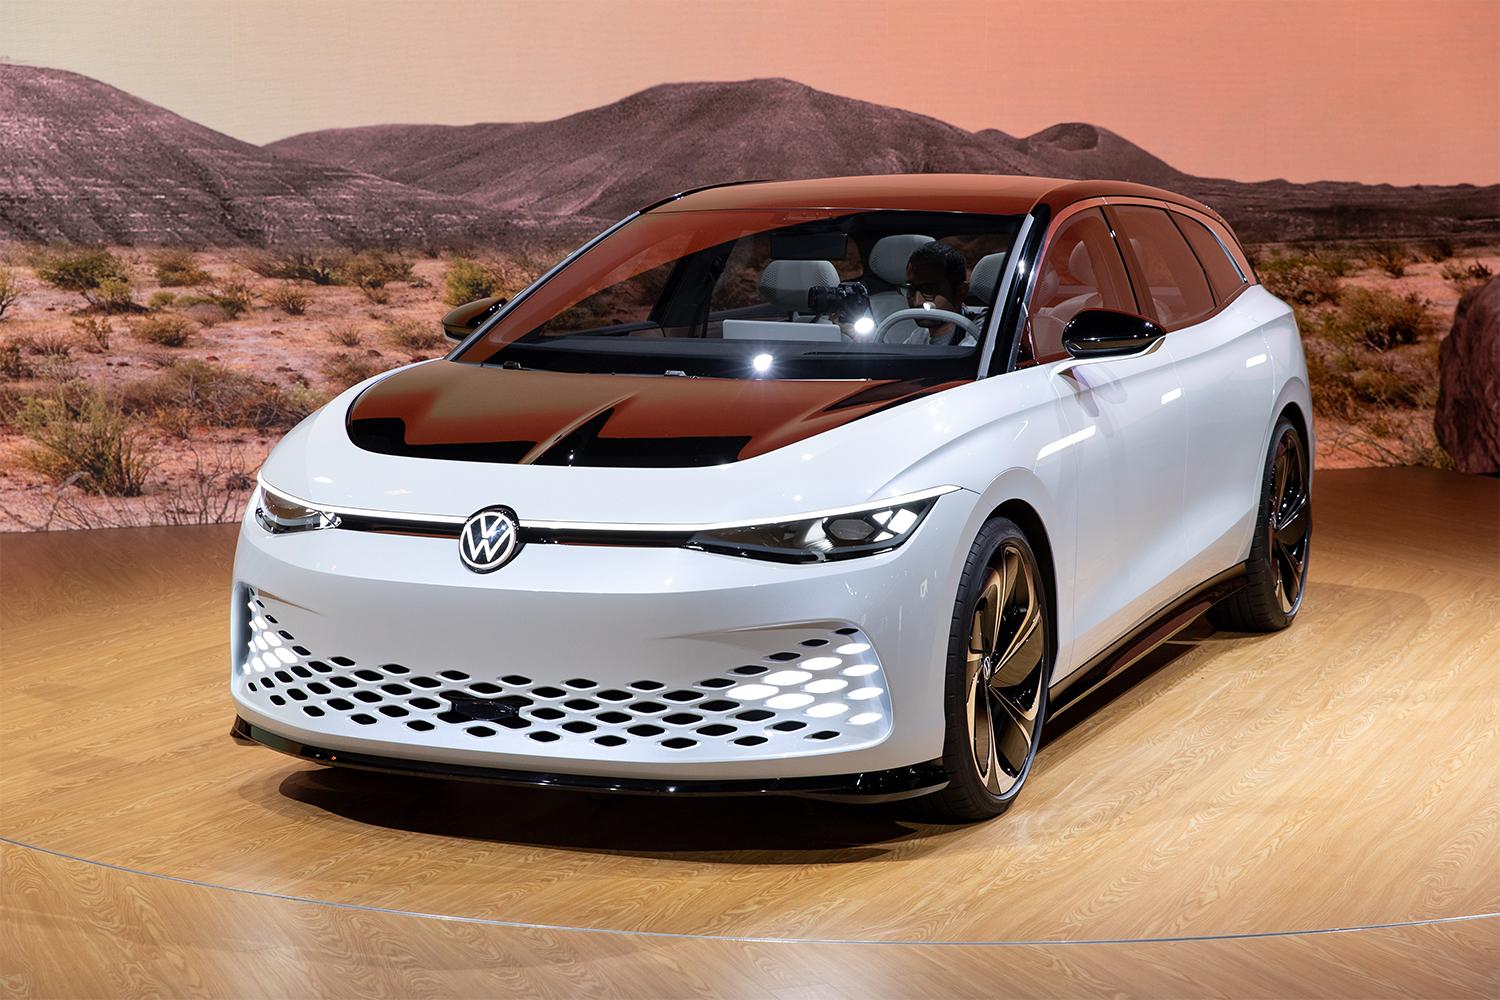 Volkswagen I.D. Space Vizzion concept electric vehicle